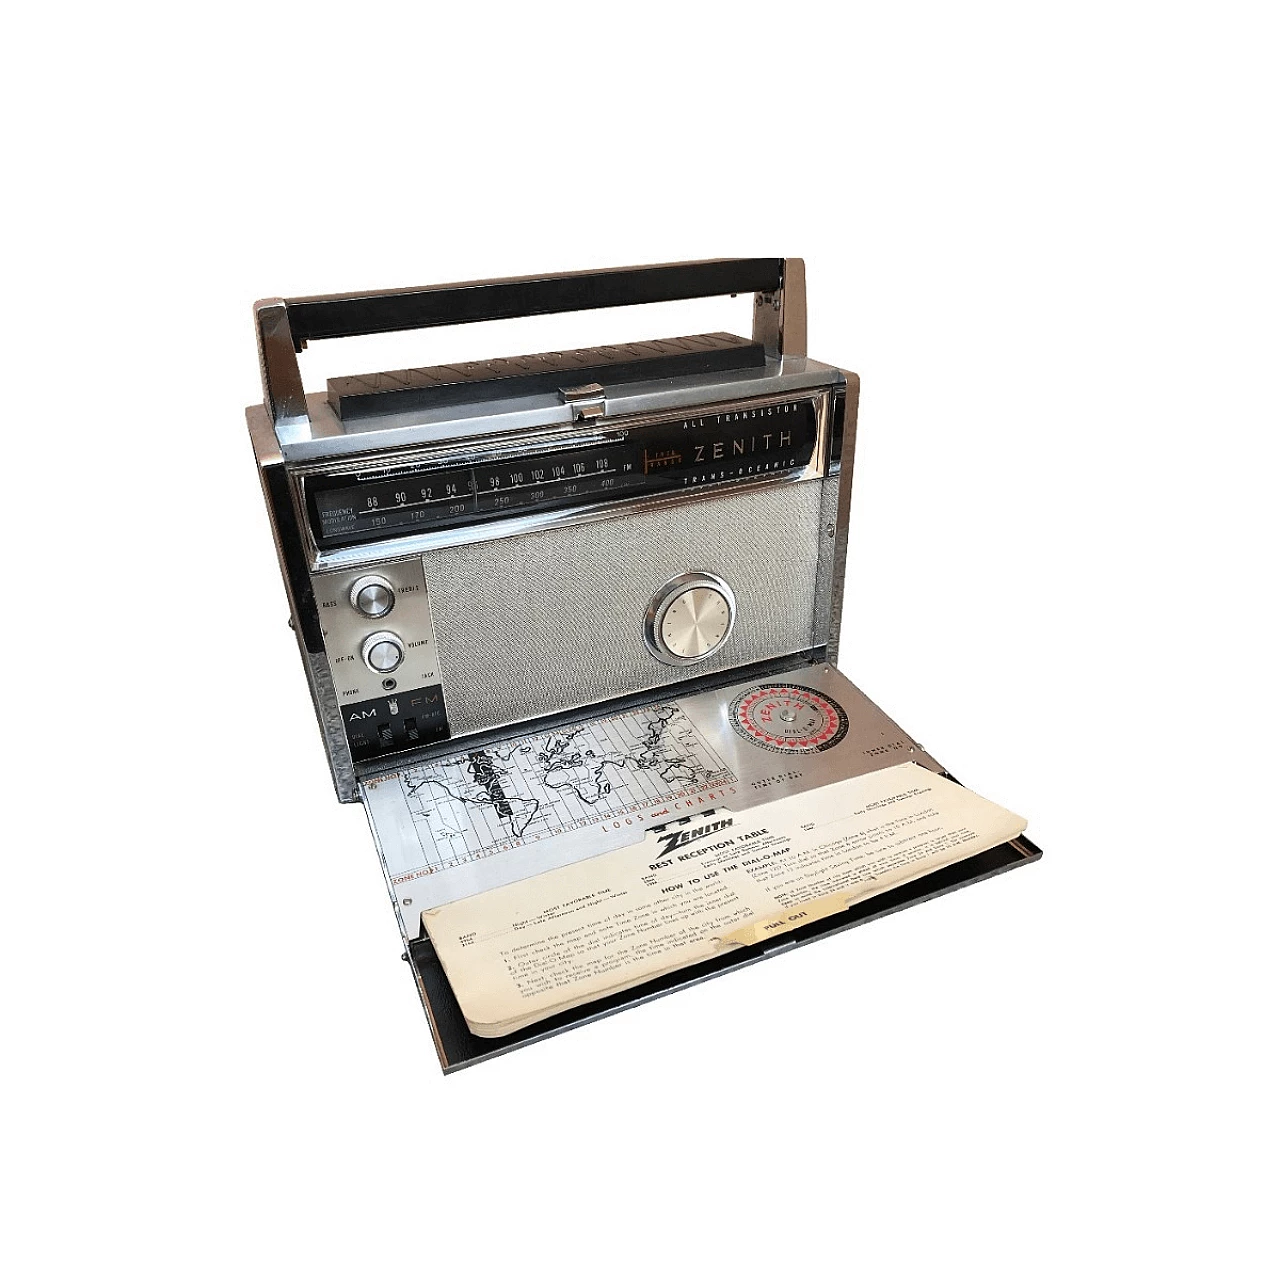 Zenith trans-Oceanic shortwave radio, 1940s 1061016